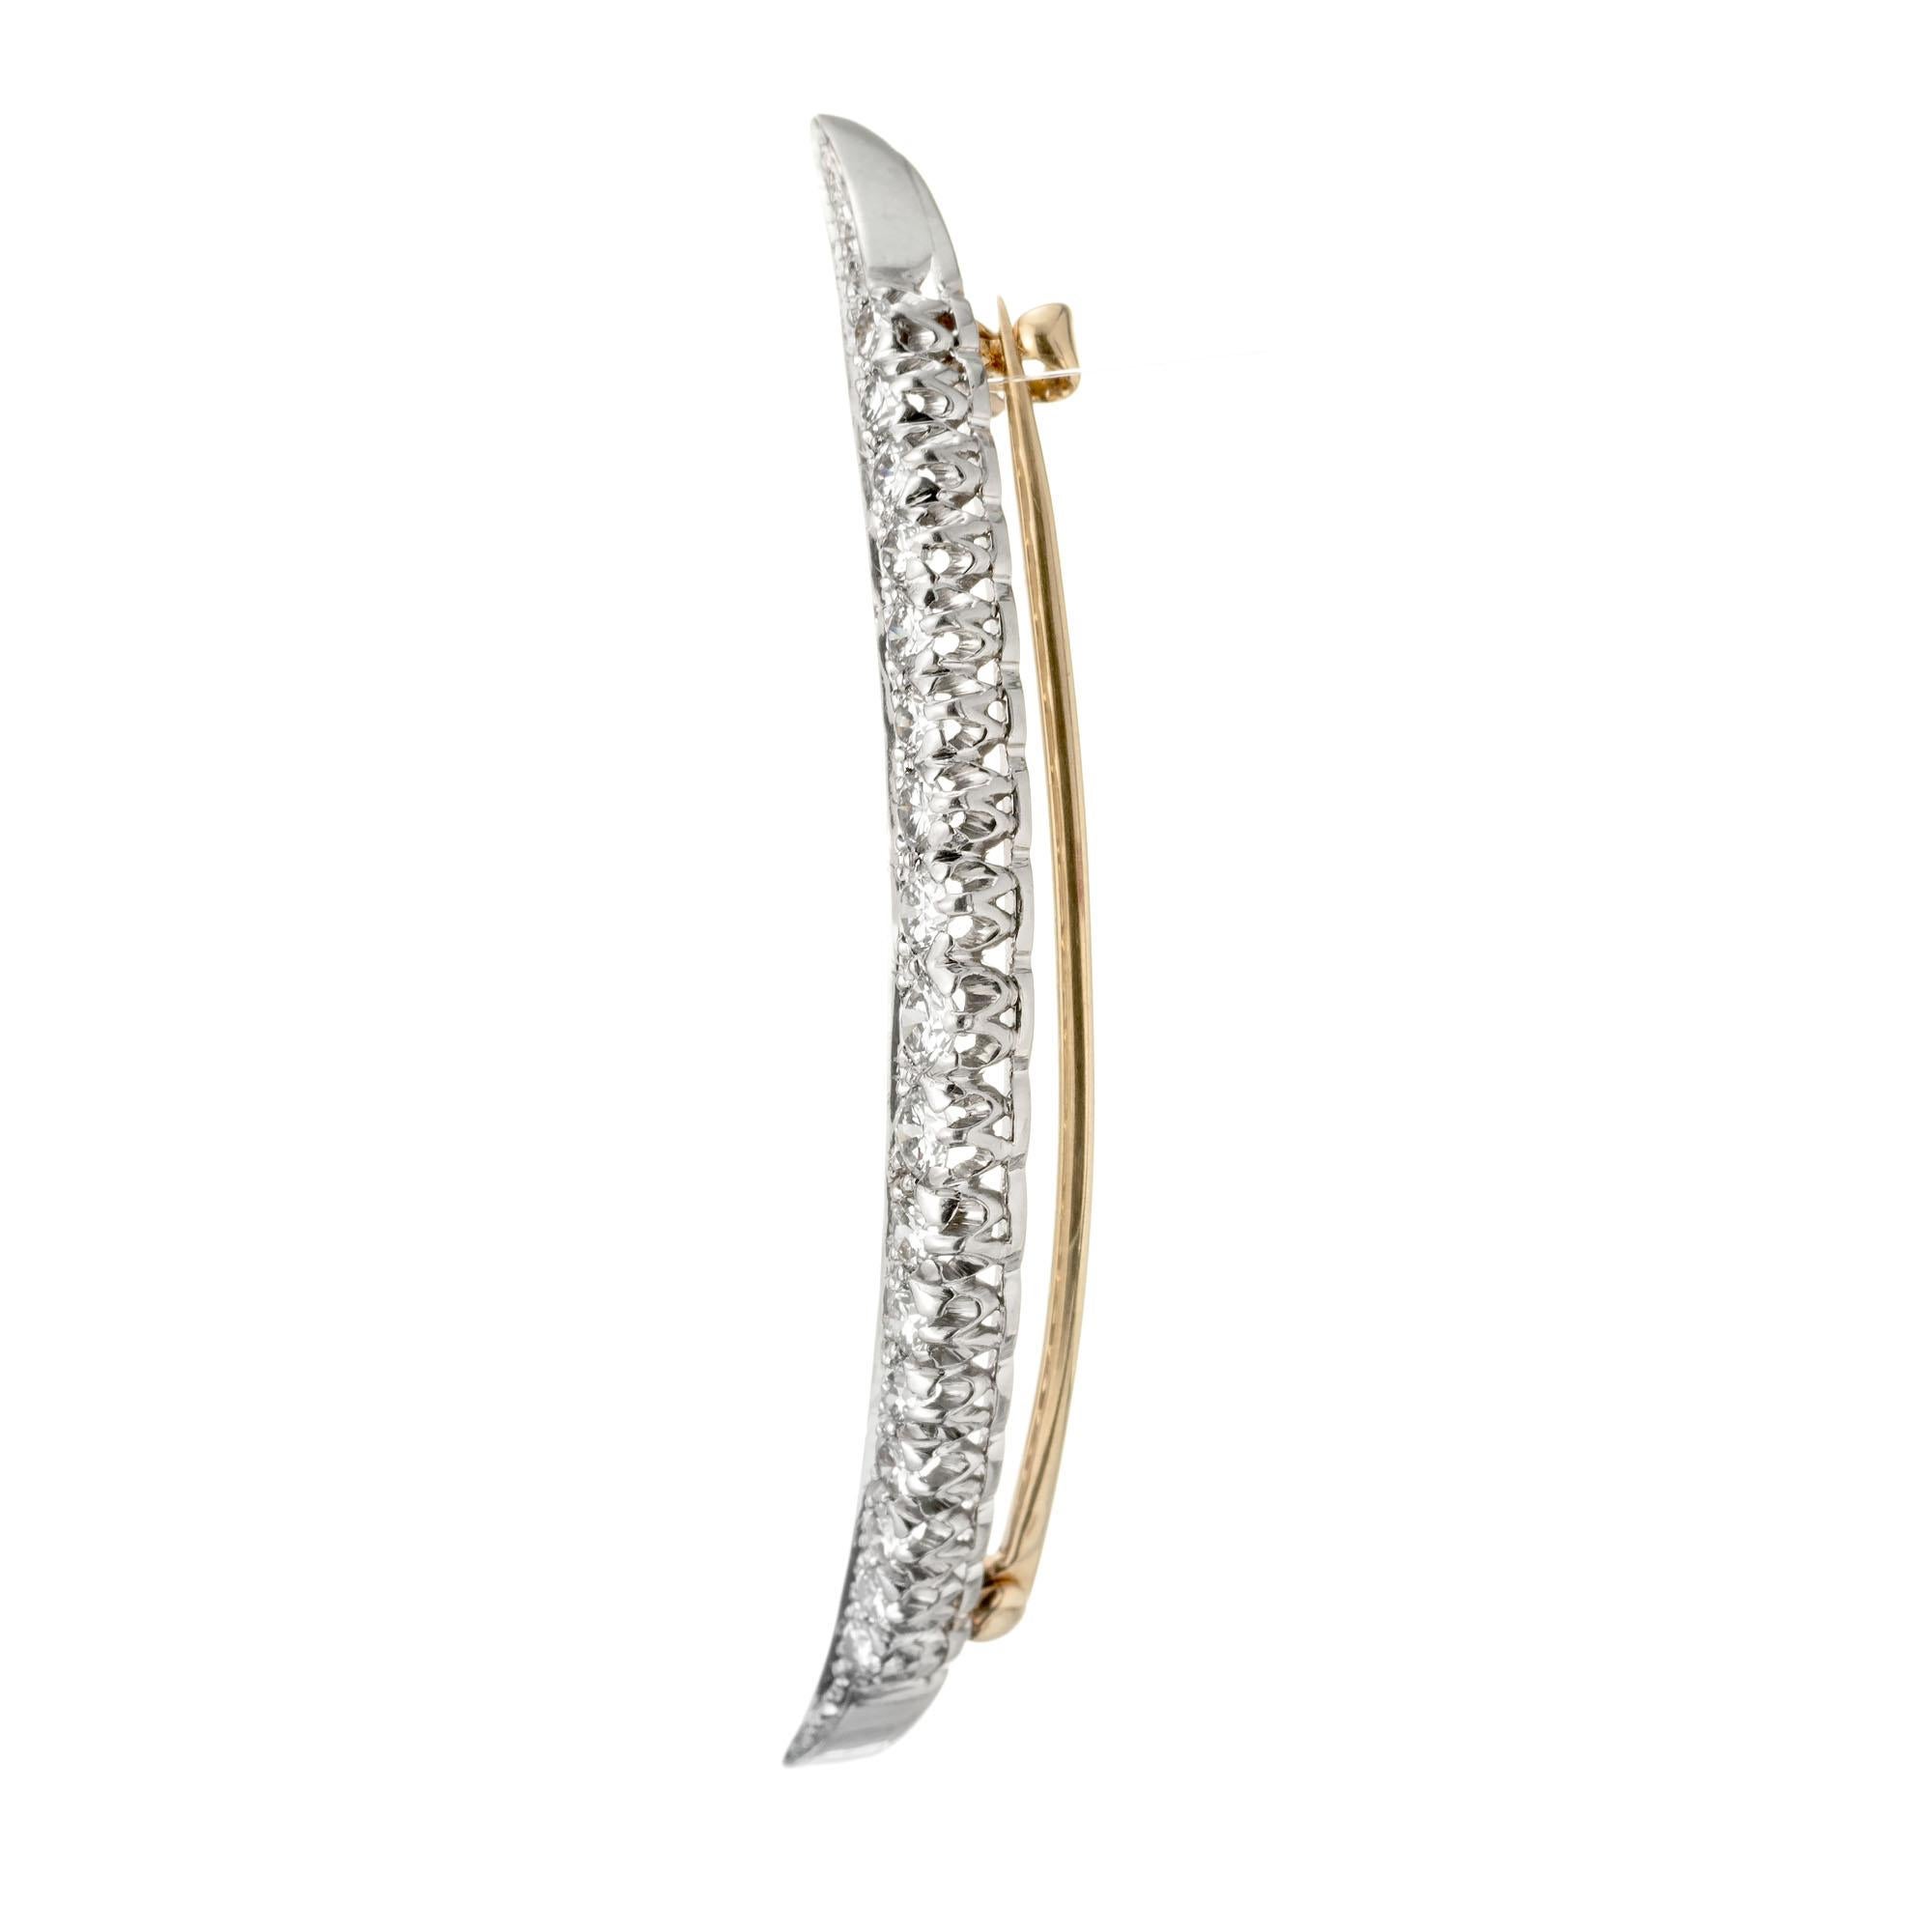 Tiffany & Co crescent moon platinum and 18k yellow gold 17 round brilliant cut diamond brooch. Circa 1957

17 round brilliant cut diamonds, G-H VS approx. .80cts
Platinum 
Stamped: 10% IRID PLAT
Hallmark: Tiffany & Co
5.0 grams
Top to bottom: 50.3mm